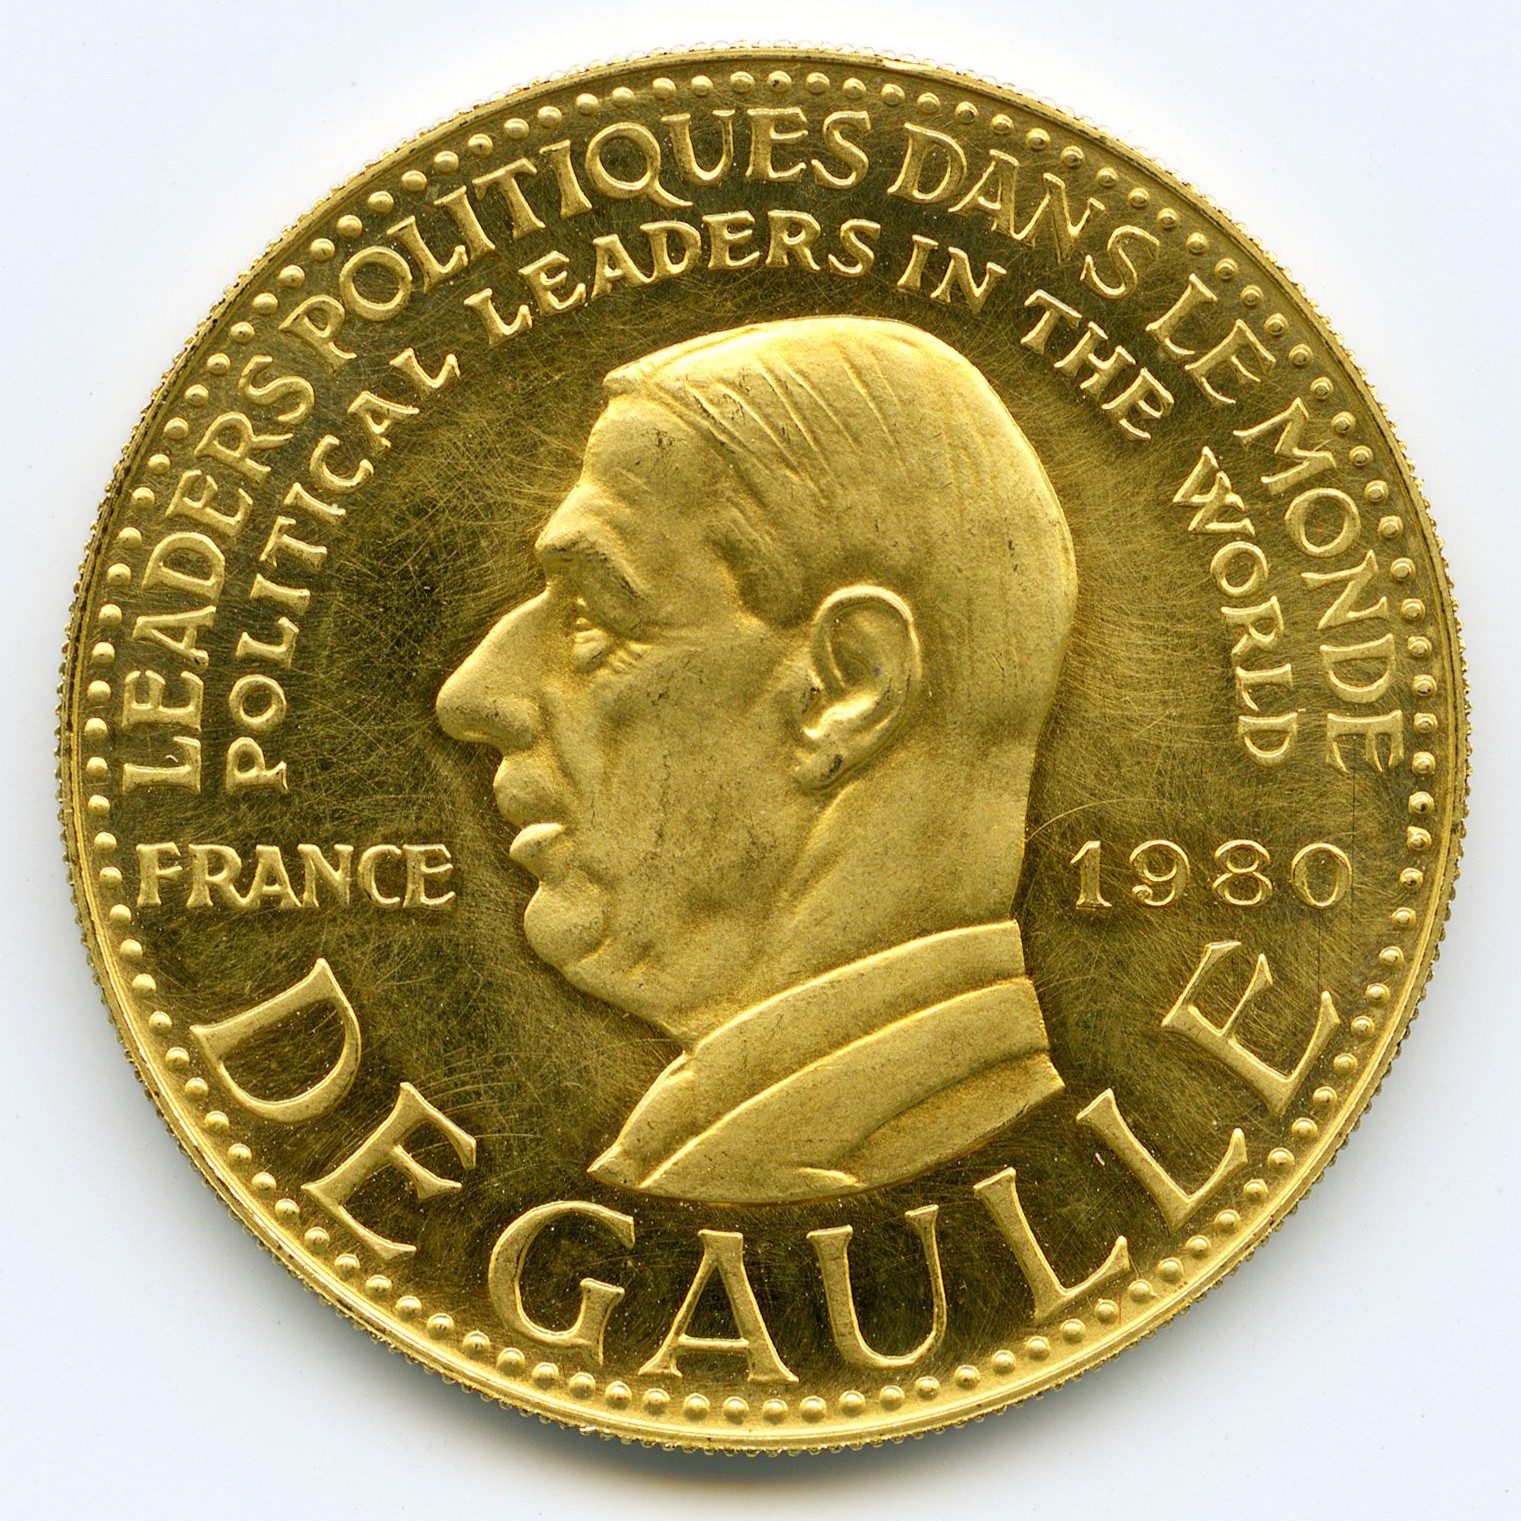 France - Médaille Charles De Gaulle avers